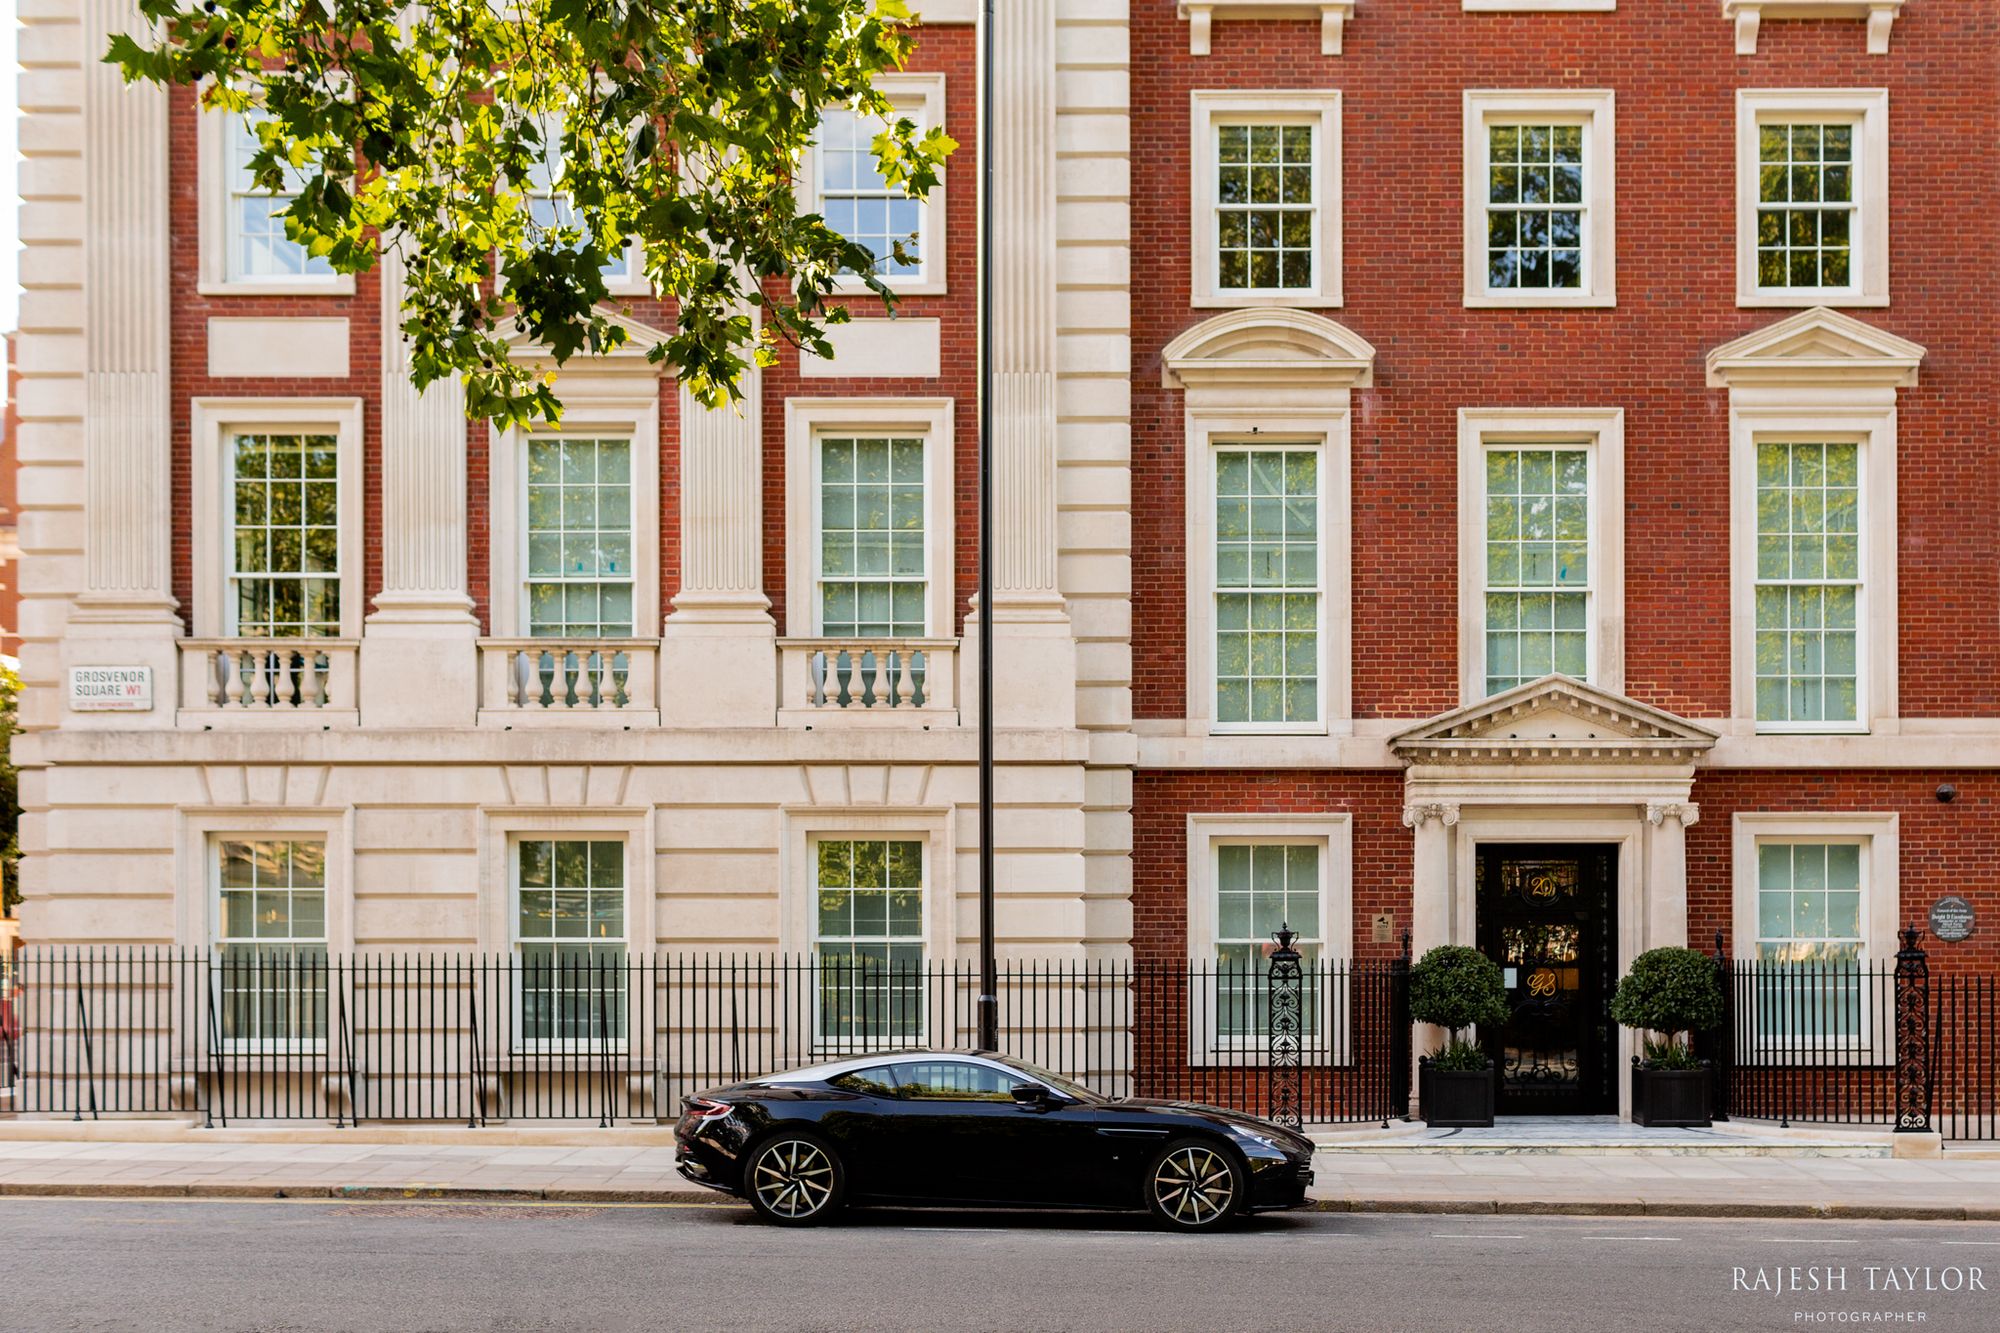 Aston Martin DB8, Grosvenor Square, Mayfair. Rajesh Taylor ©